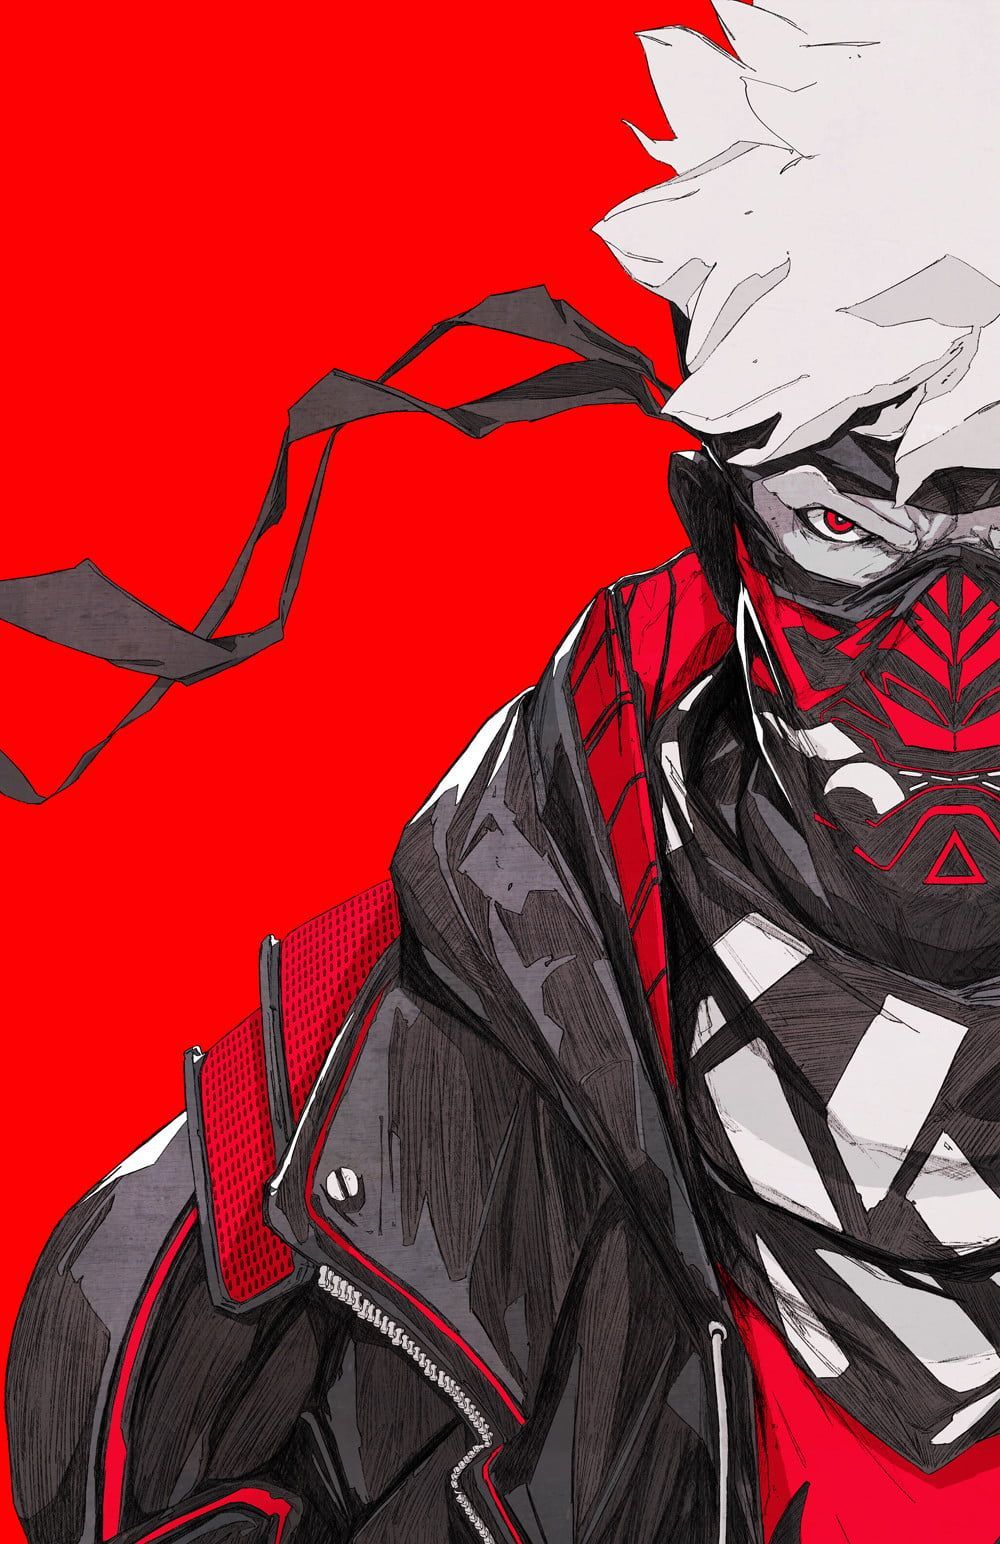 Chun Lo #artwork #illustration digital art #mask #warrior #cyberpunk oni mask #Japan red background #sketches D. Ninja art, Samurai art, Anime character design